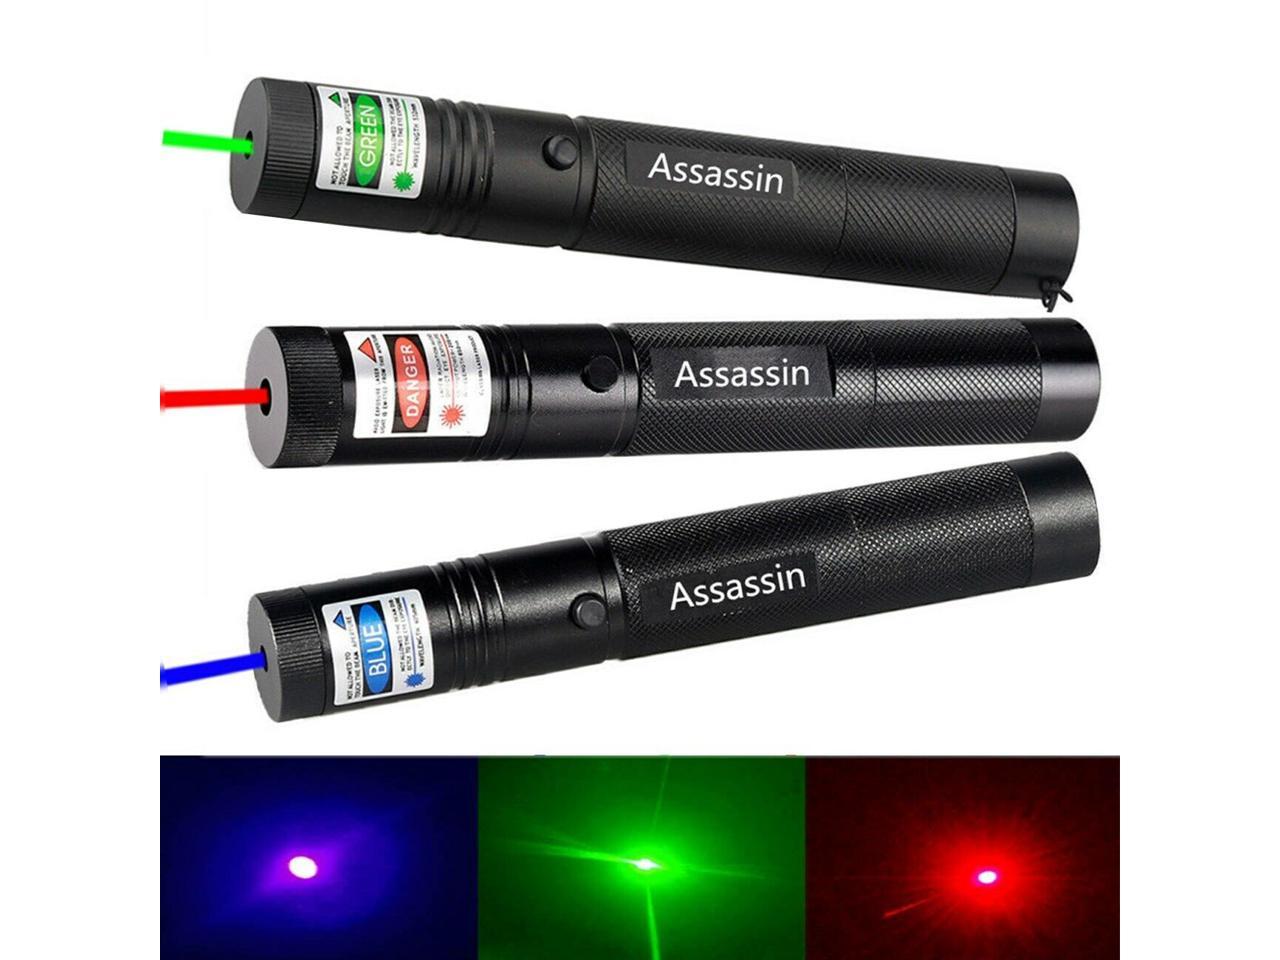 Details about   900Miles 650nm Assassin Red Laser Pointer Pen Visible Light Beam Lazer+Batt+Char 